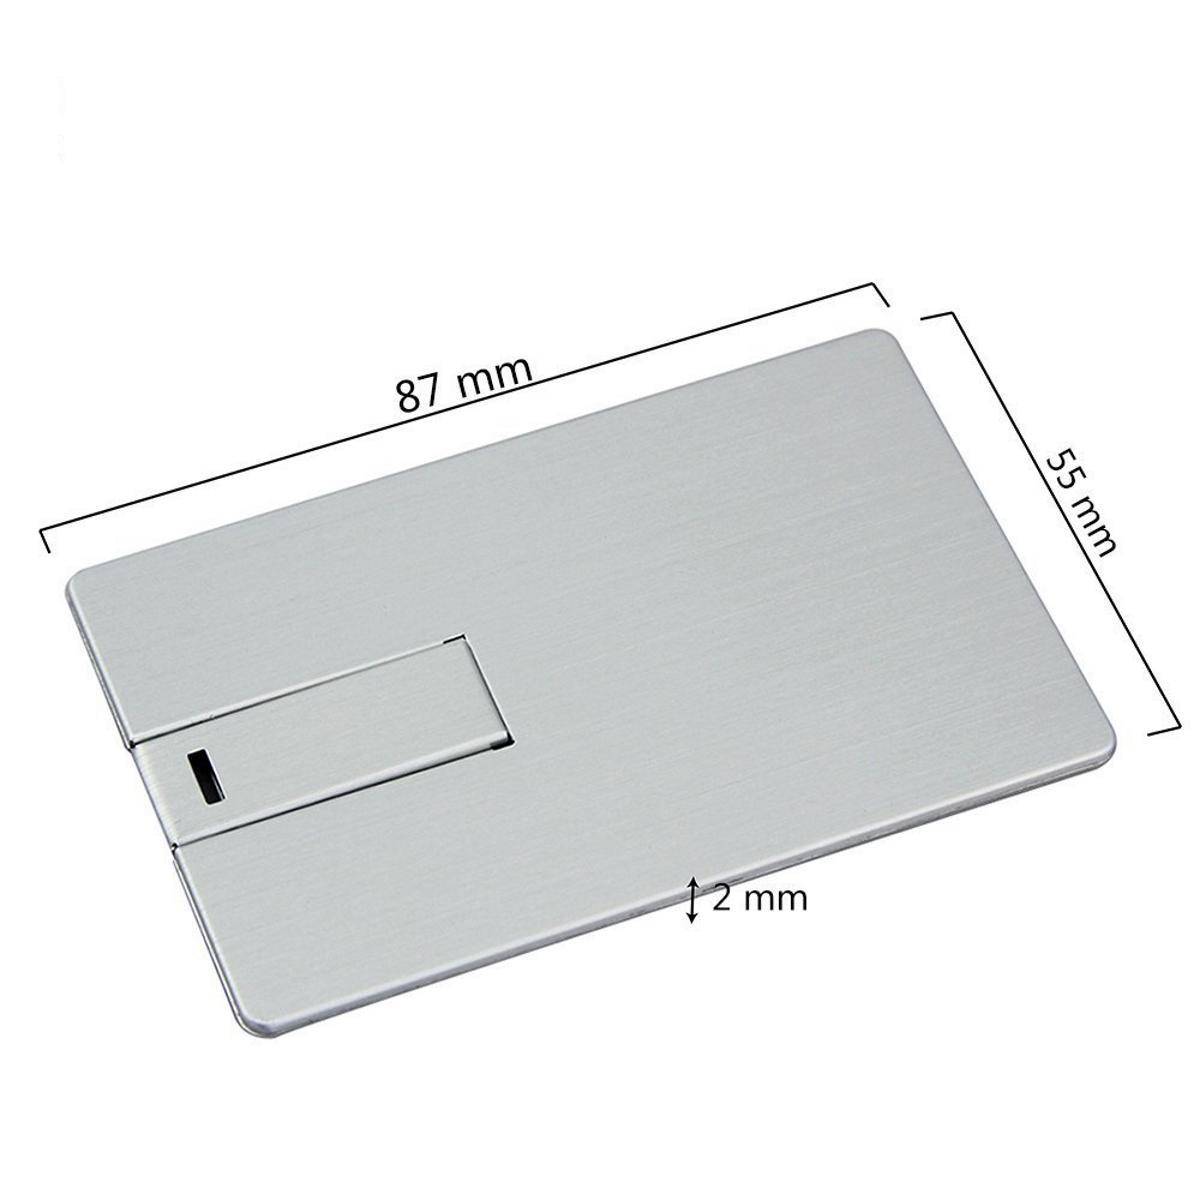 GB) Metall-Kreditkarte 8 GERMANY USB-Stick (Silber, USB ®